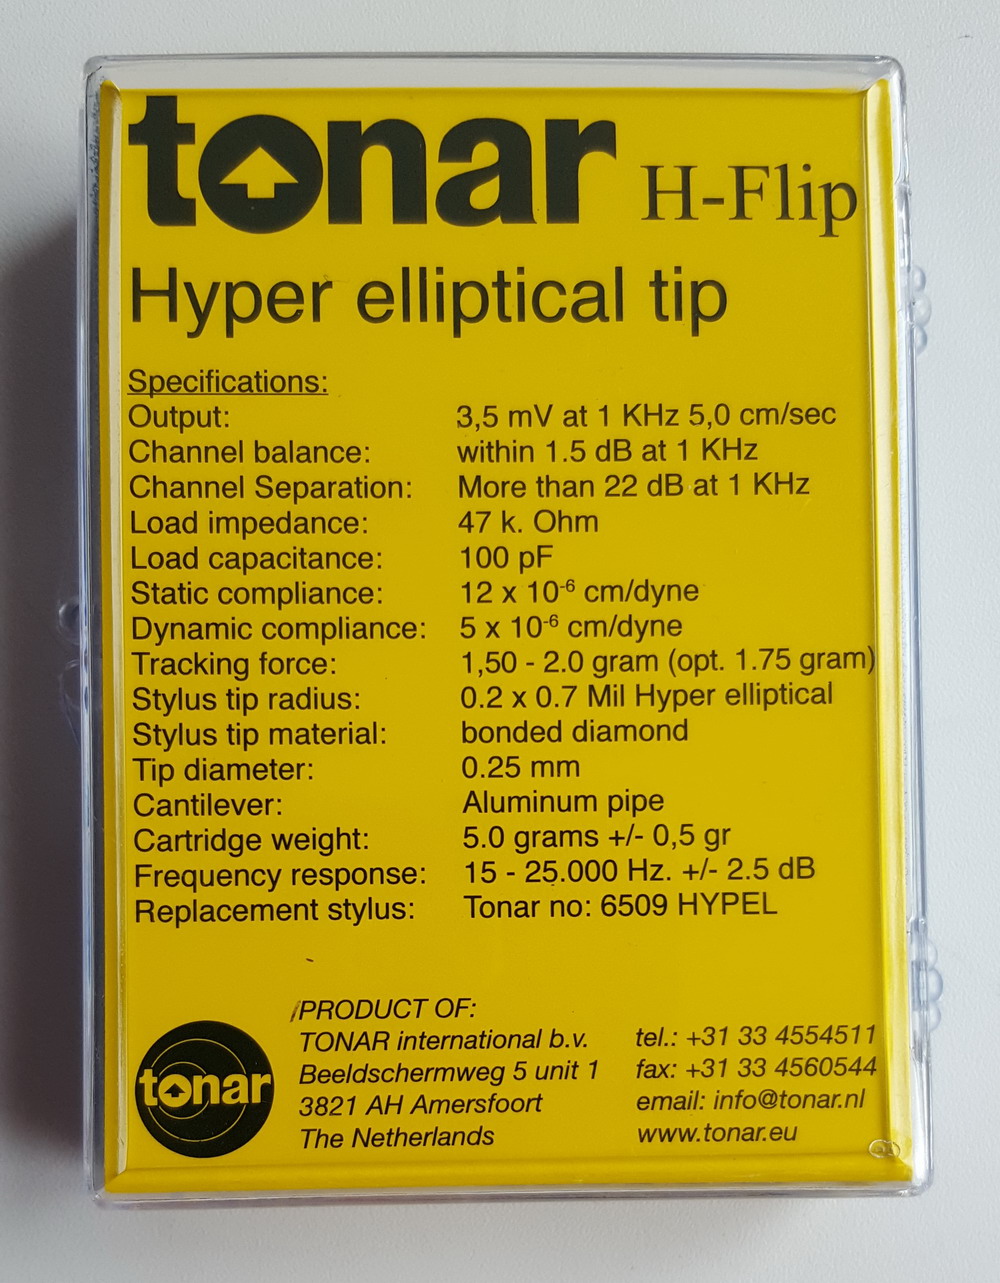   3   i  :TONAR H-Flip (Hyper elliptical tip), art. 9583